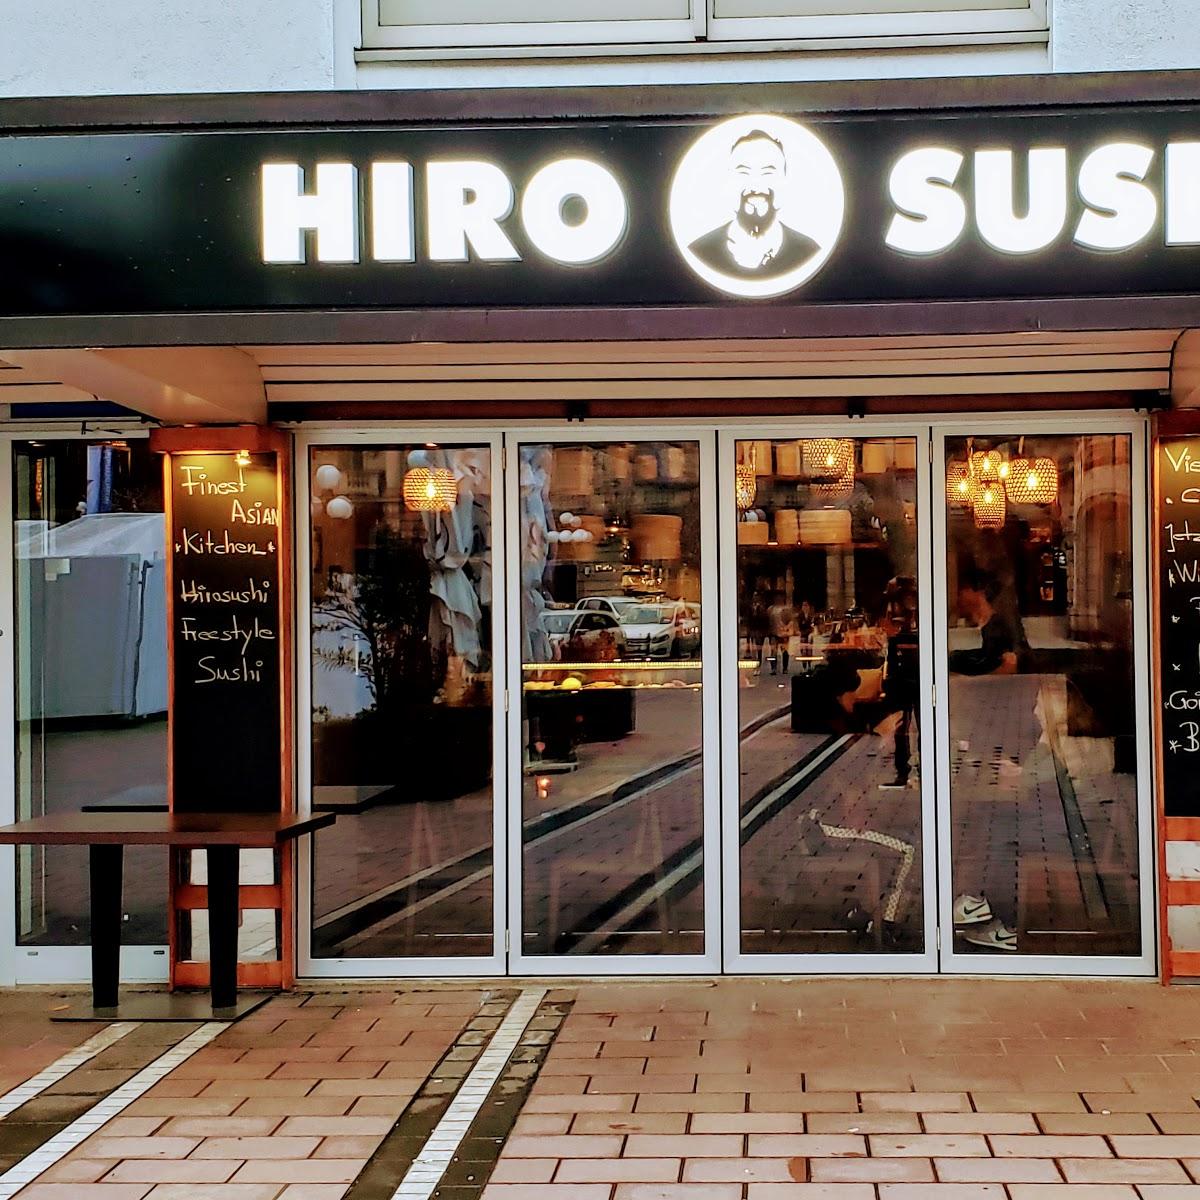 Restaurant "Hiro Sushi" in Wiesbaden